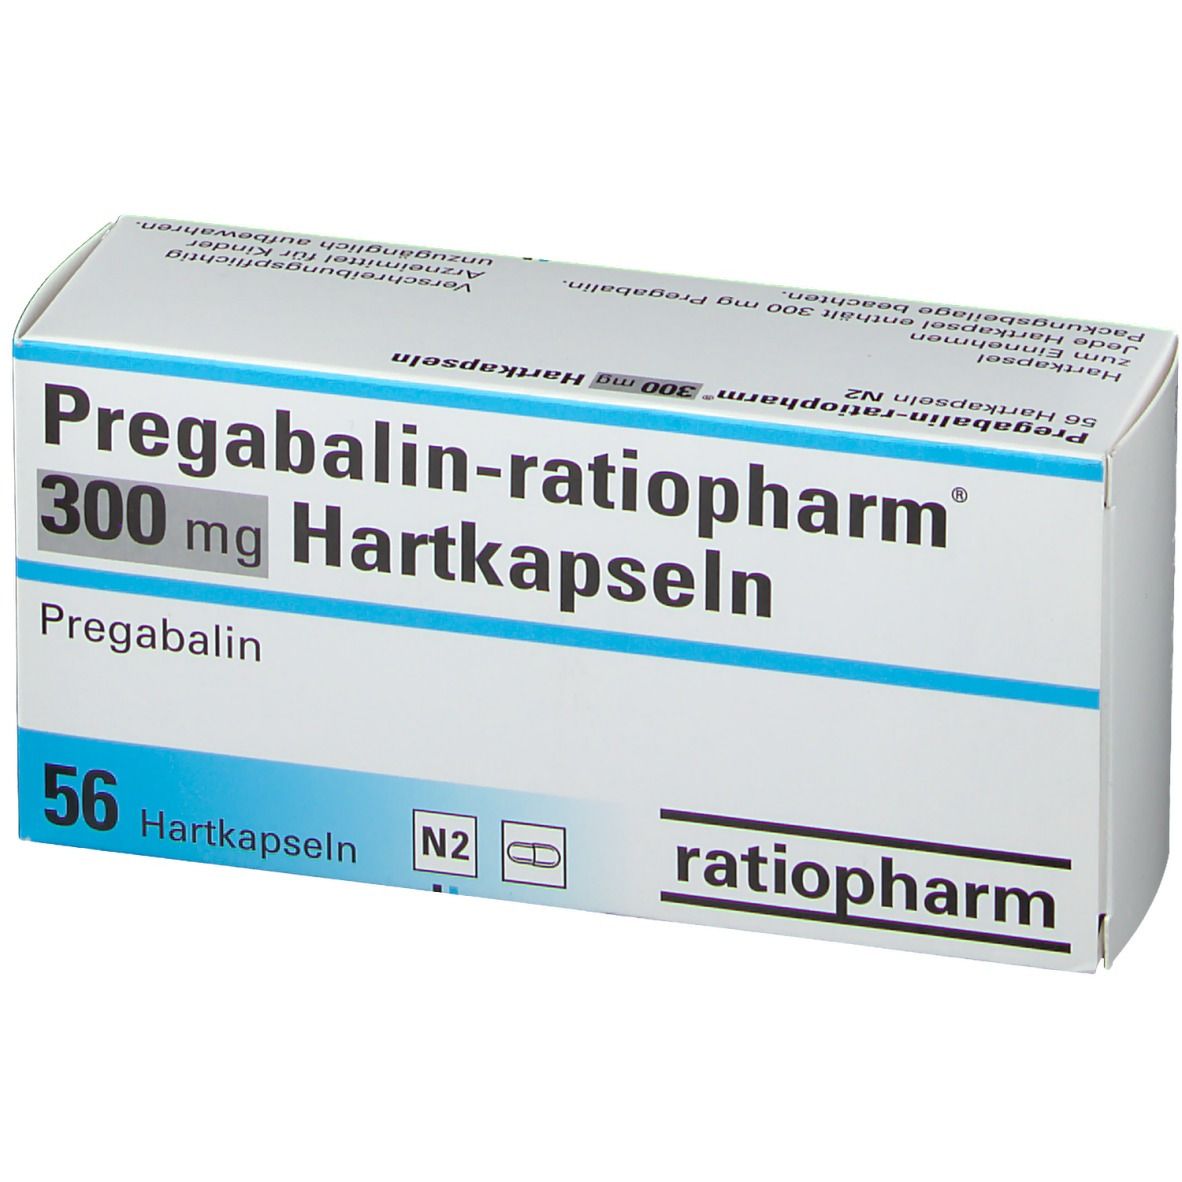 Pregabalin-ratiopharm® 300 mg